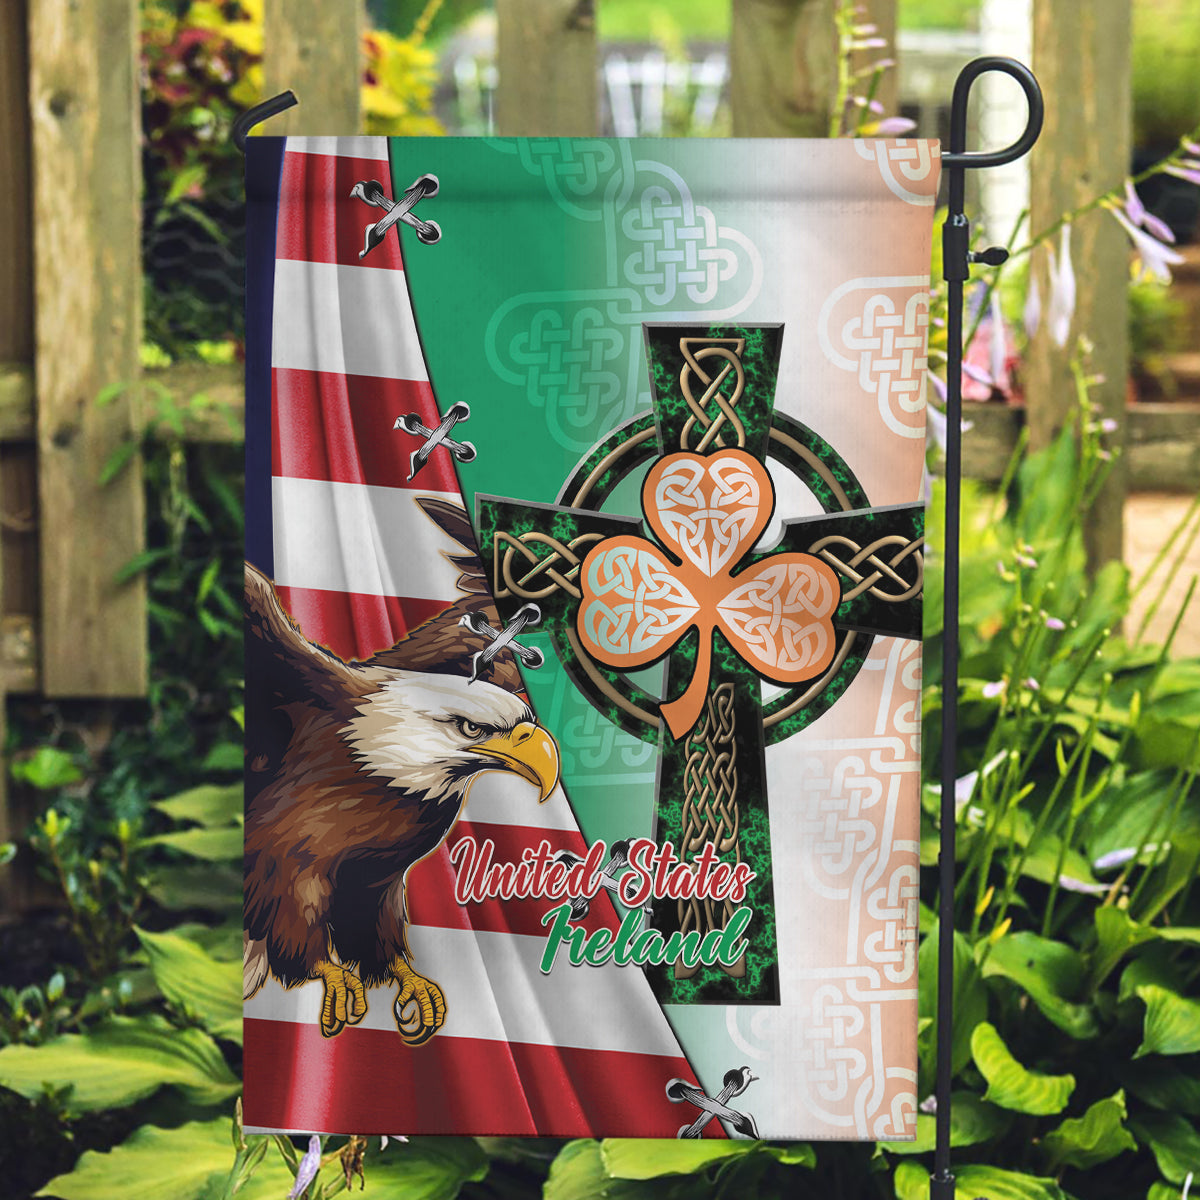 United States And Ireland Garden Flag USA Eagle With Irish Celtic Cross